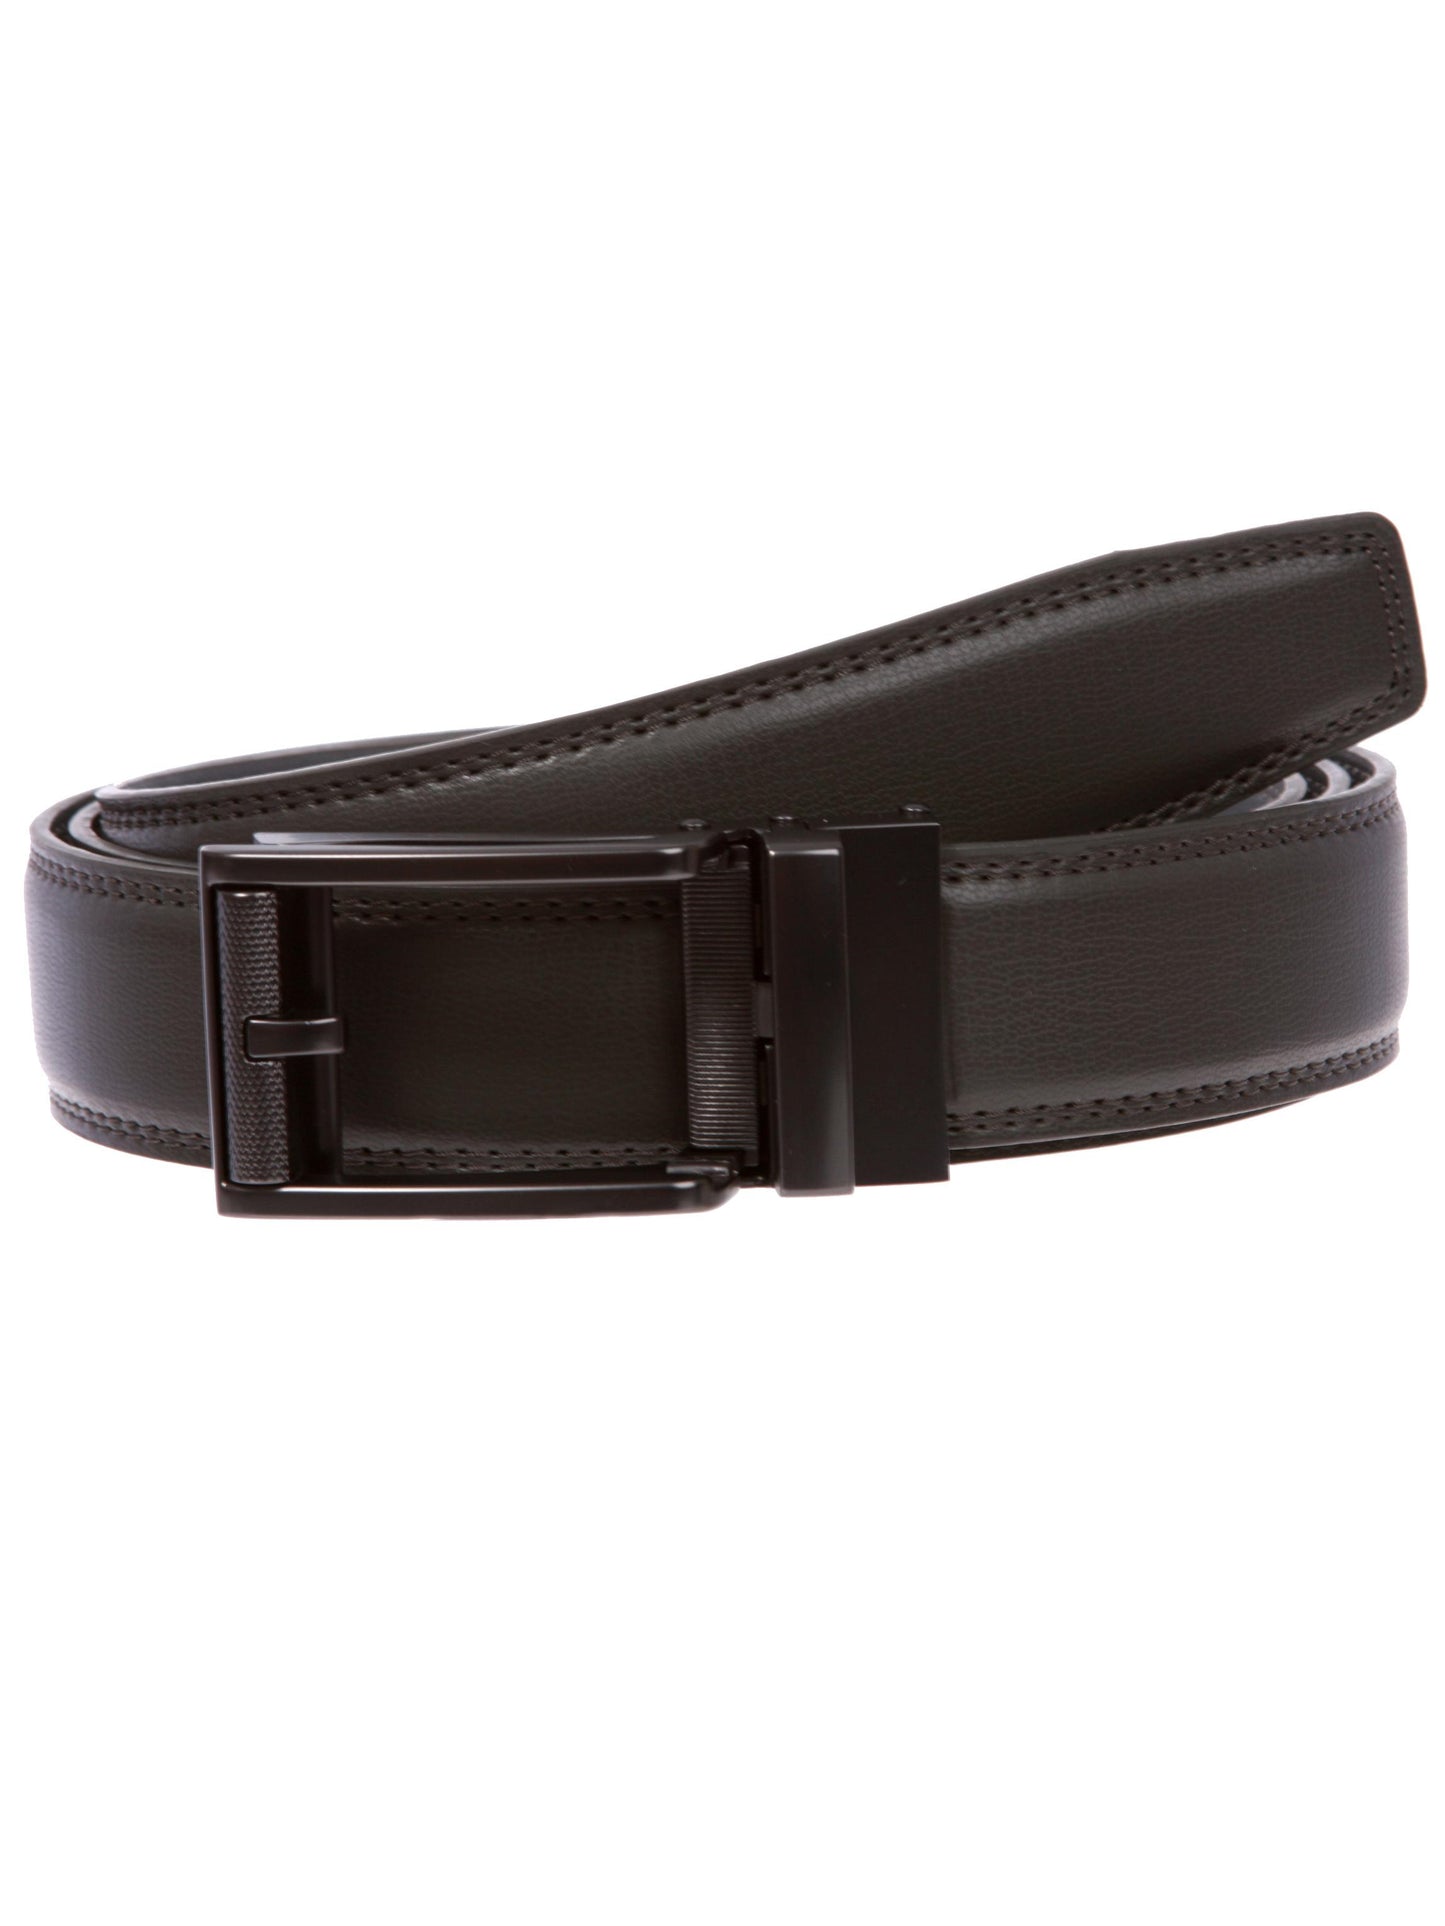 108146-Perfect Fit Black Leather Belt